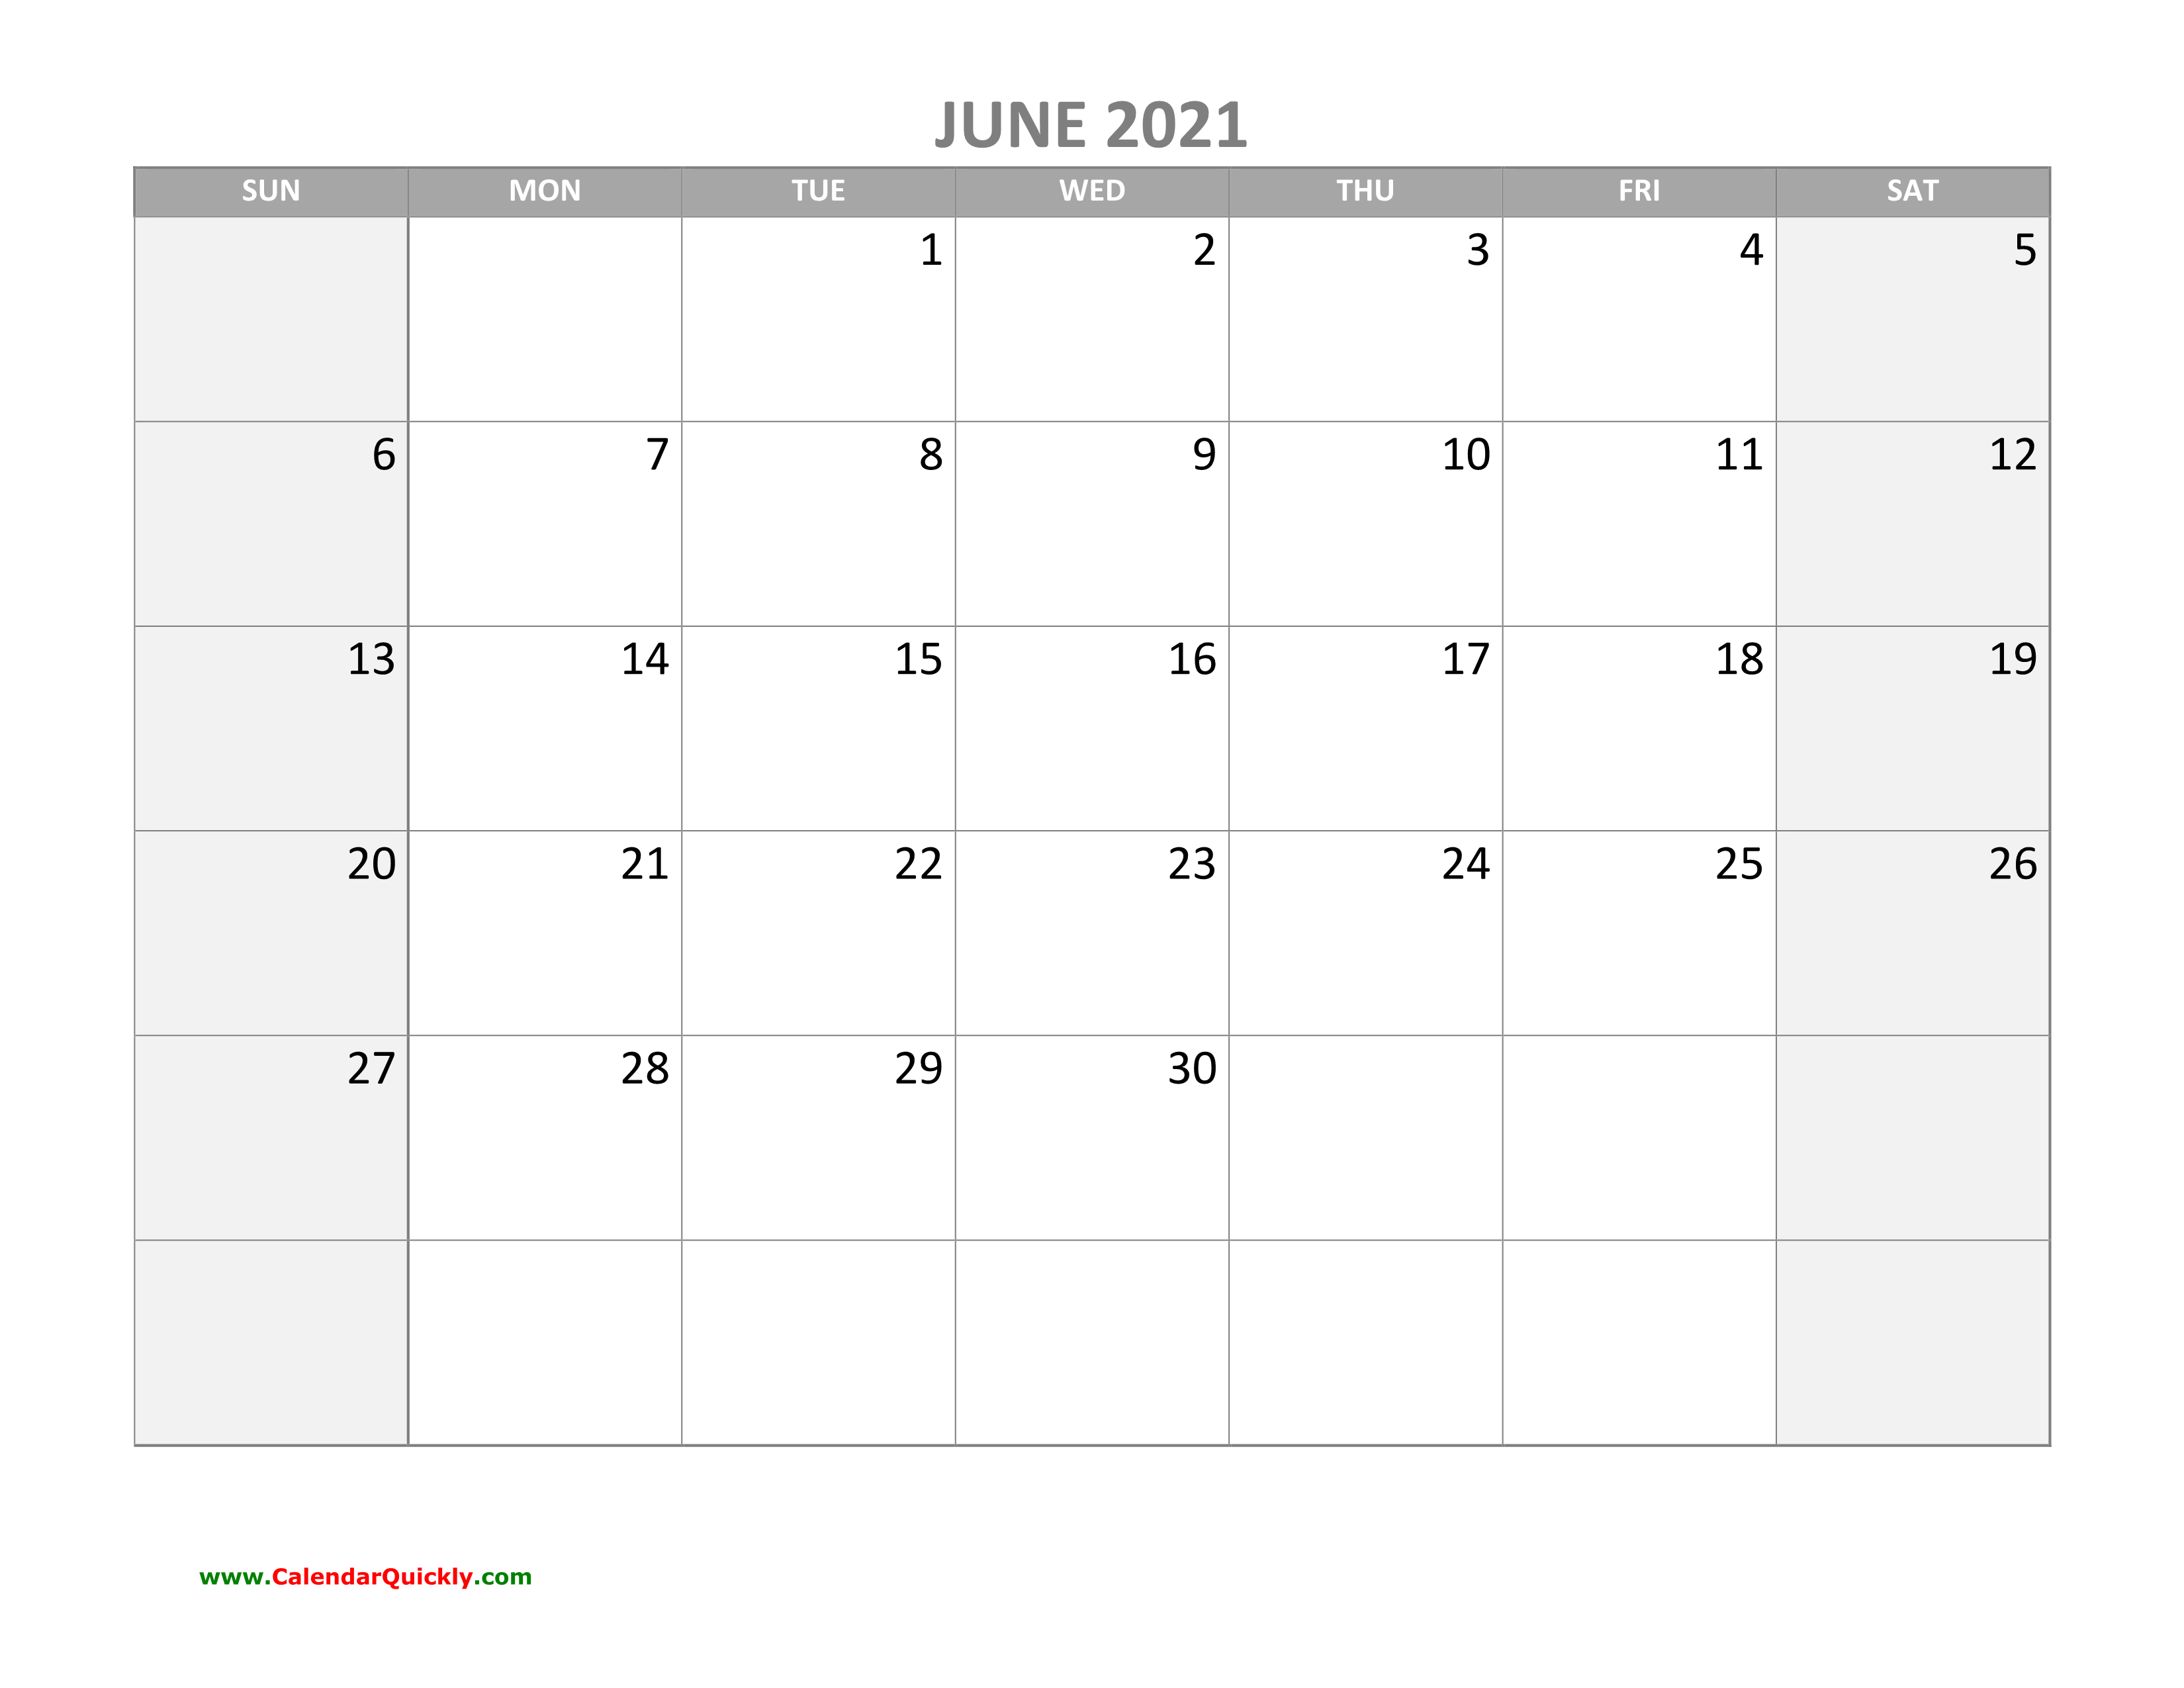 June Calendar 2021 with Holidays | Calendar Quickly